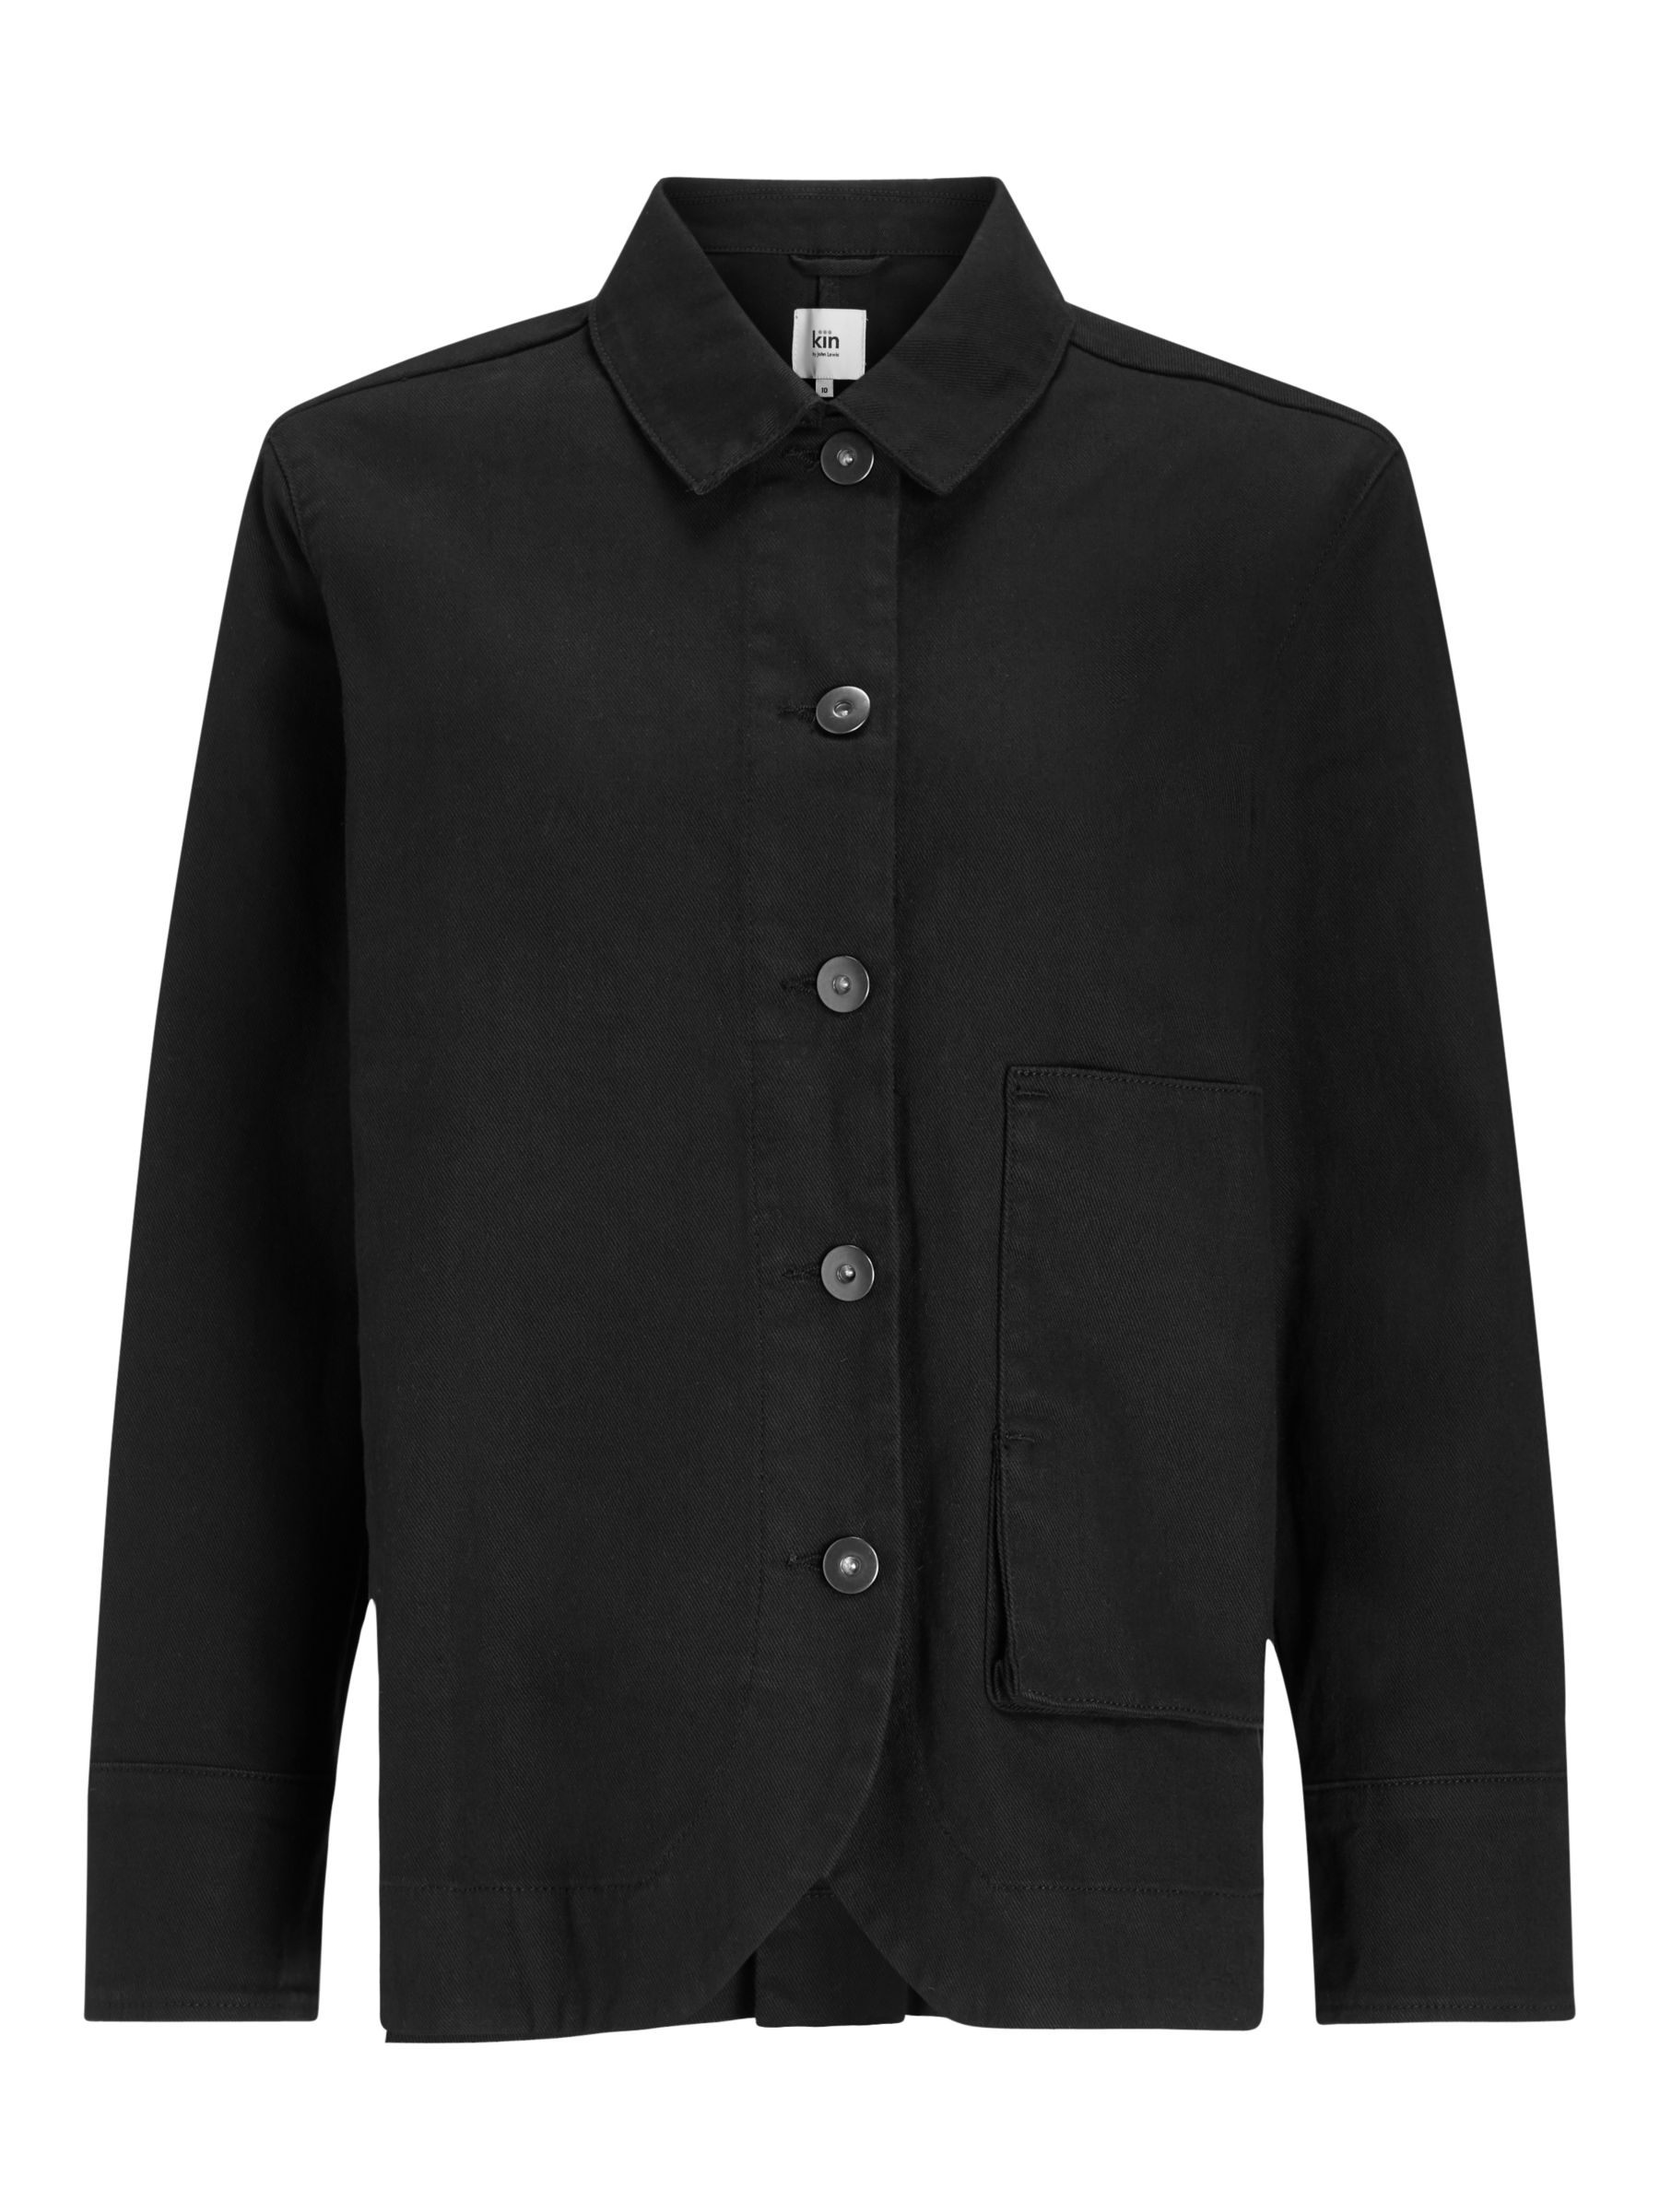 Kin Japanese Workwear Jacket, Black